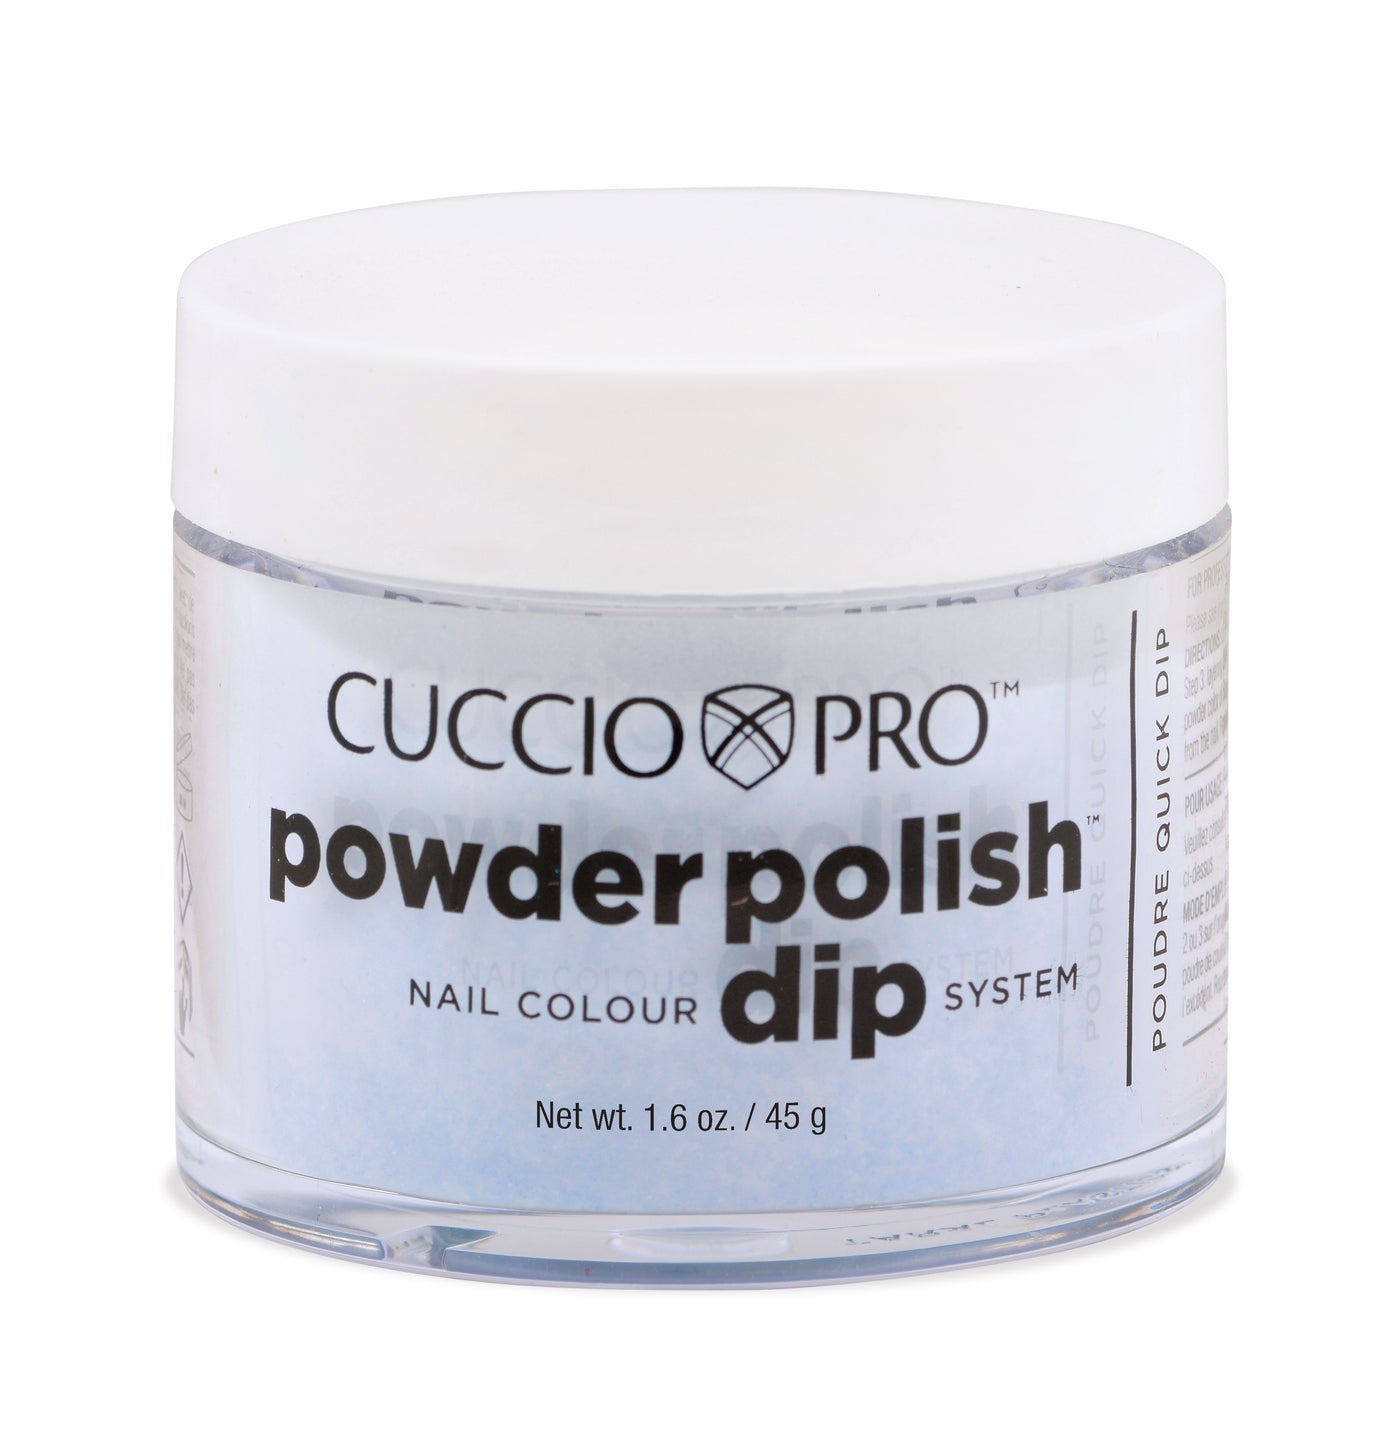 CP Dipping Powder 45g 5557 Deep Blue Glitter